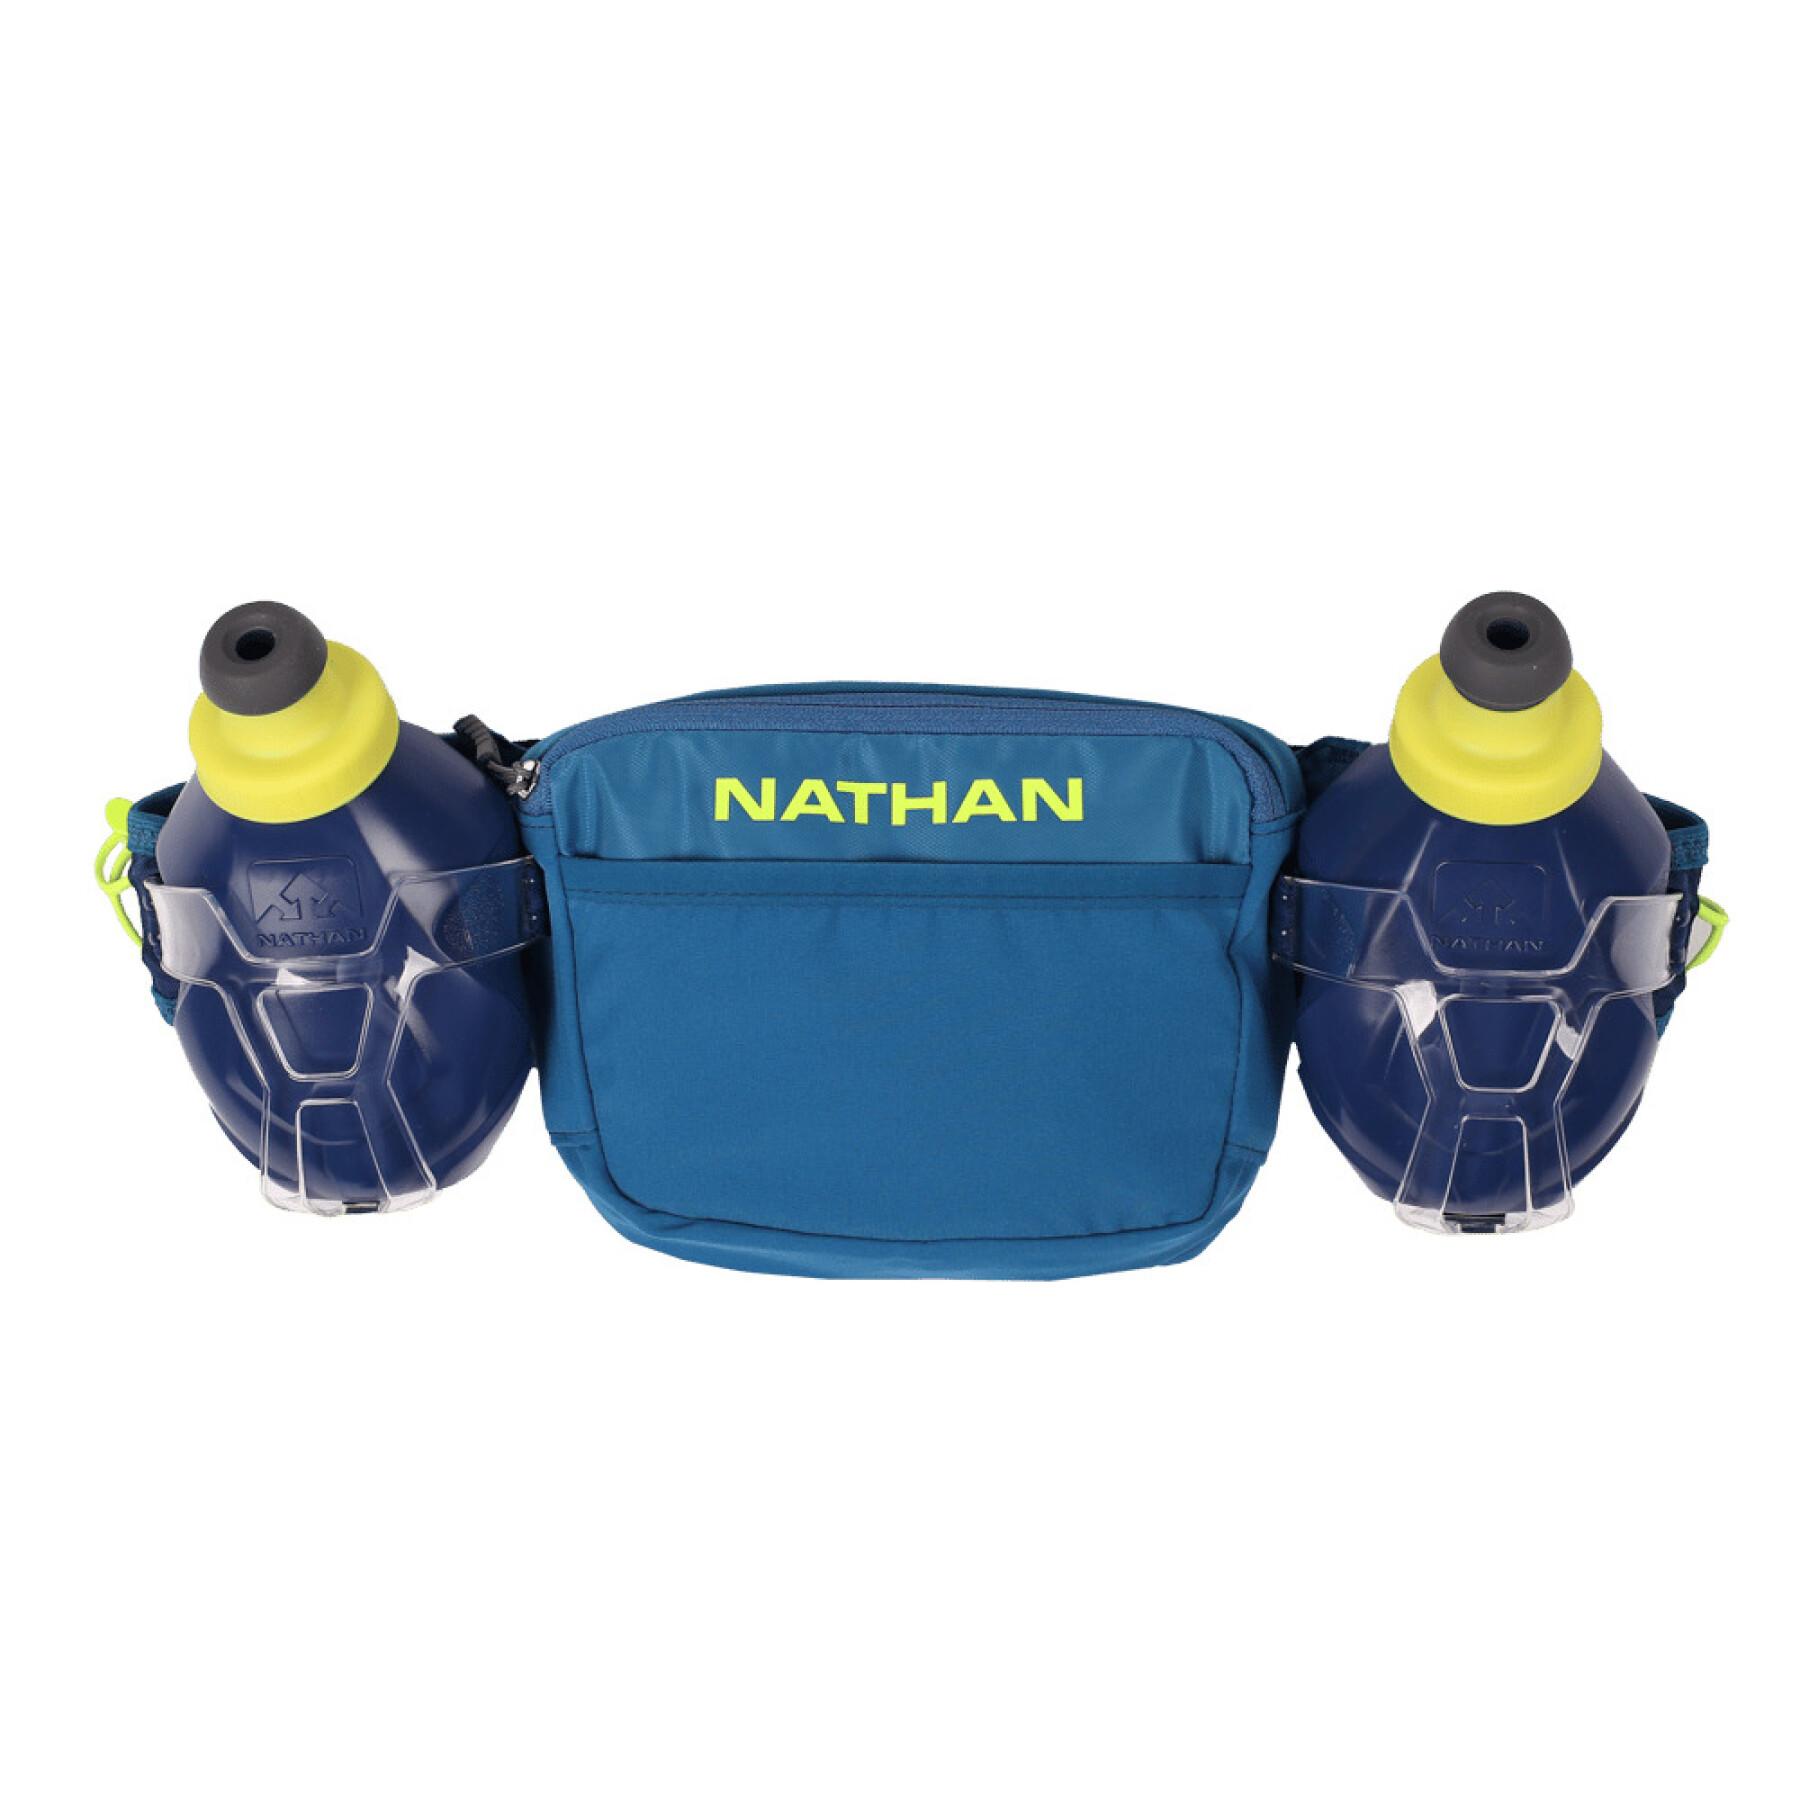 Cinturón de hidratación Nathan Trail Mix Plus 3.0